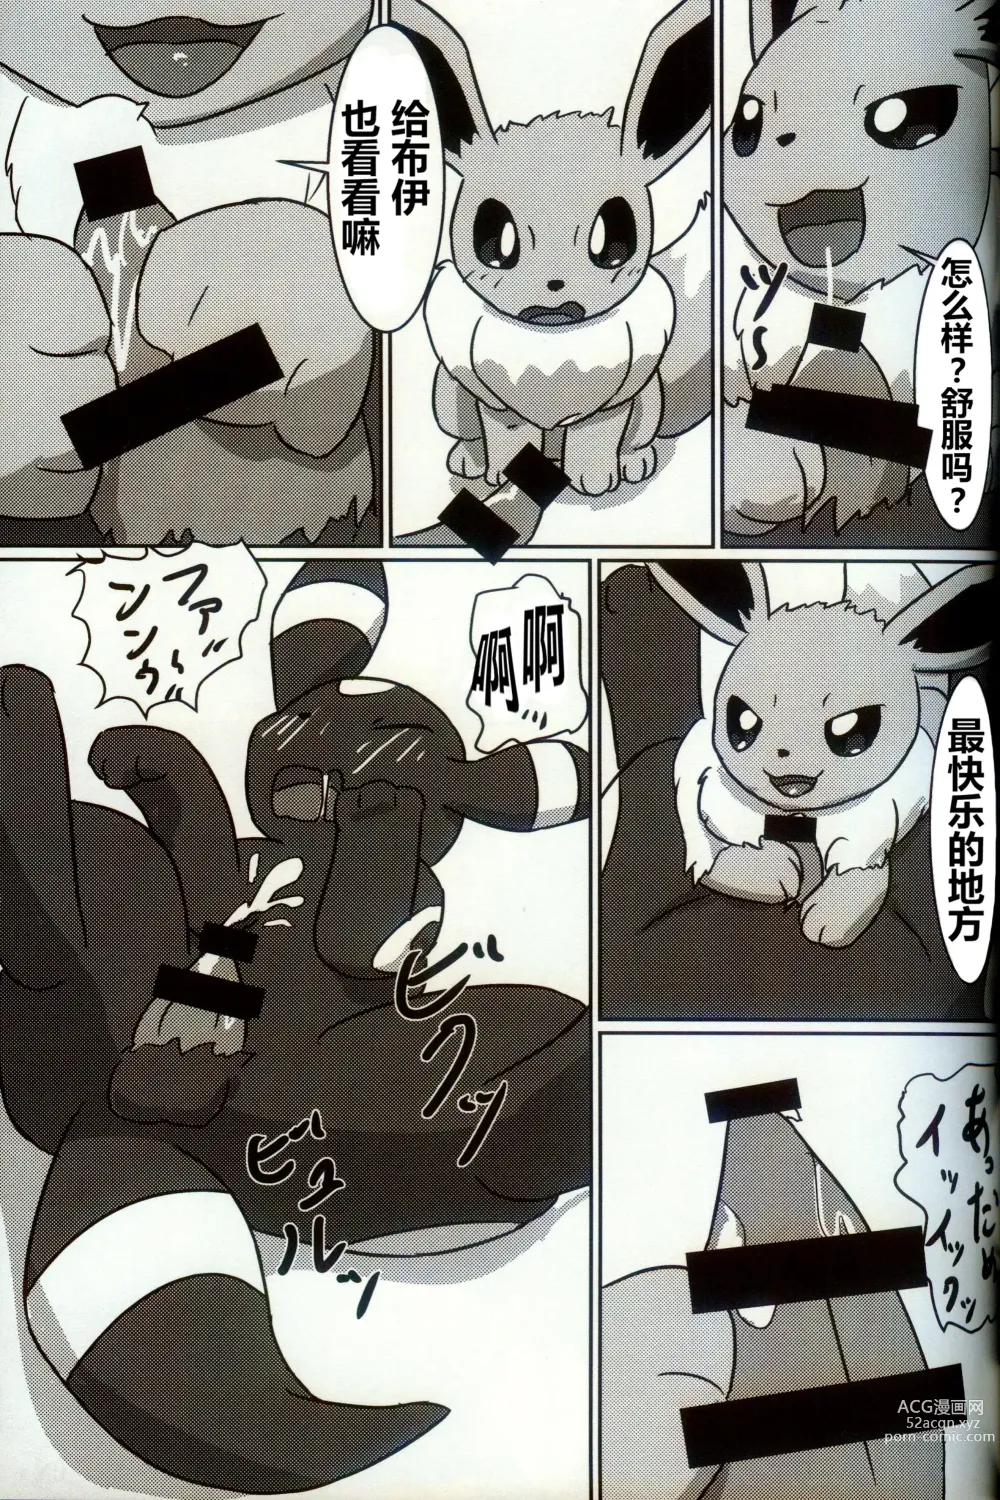 Page 11 of doujinshi 被拜托照顾附近的双胞胎发生了不得了的事...